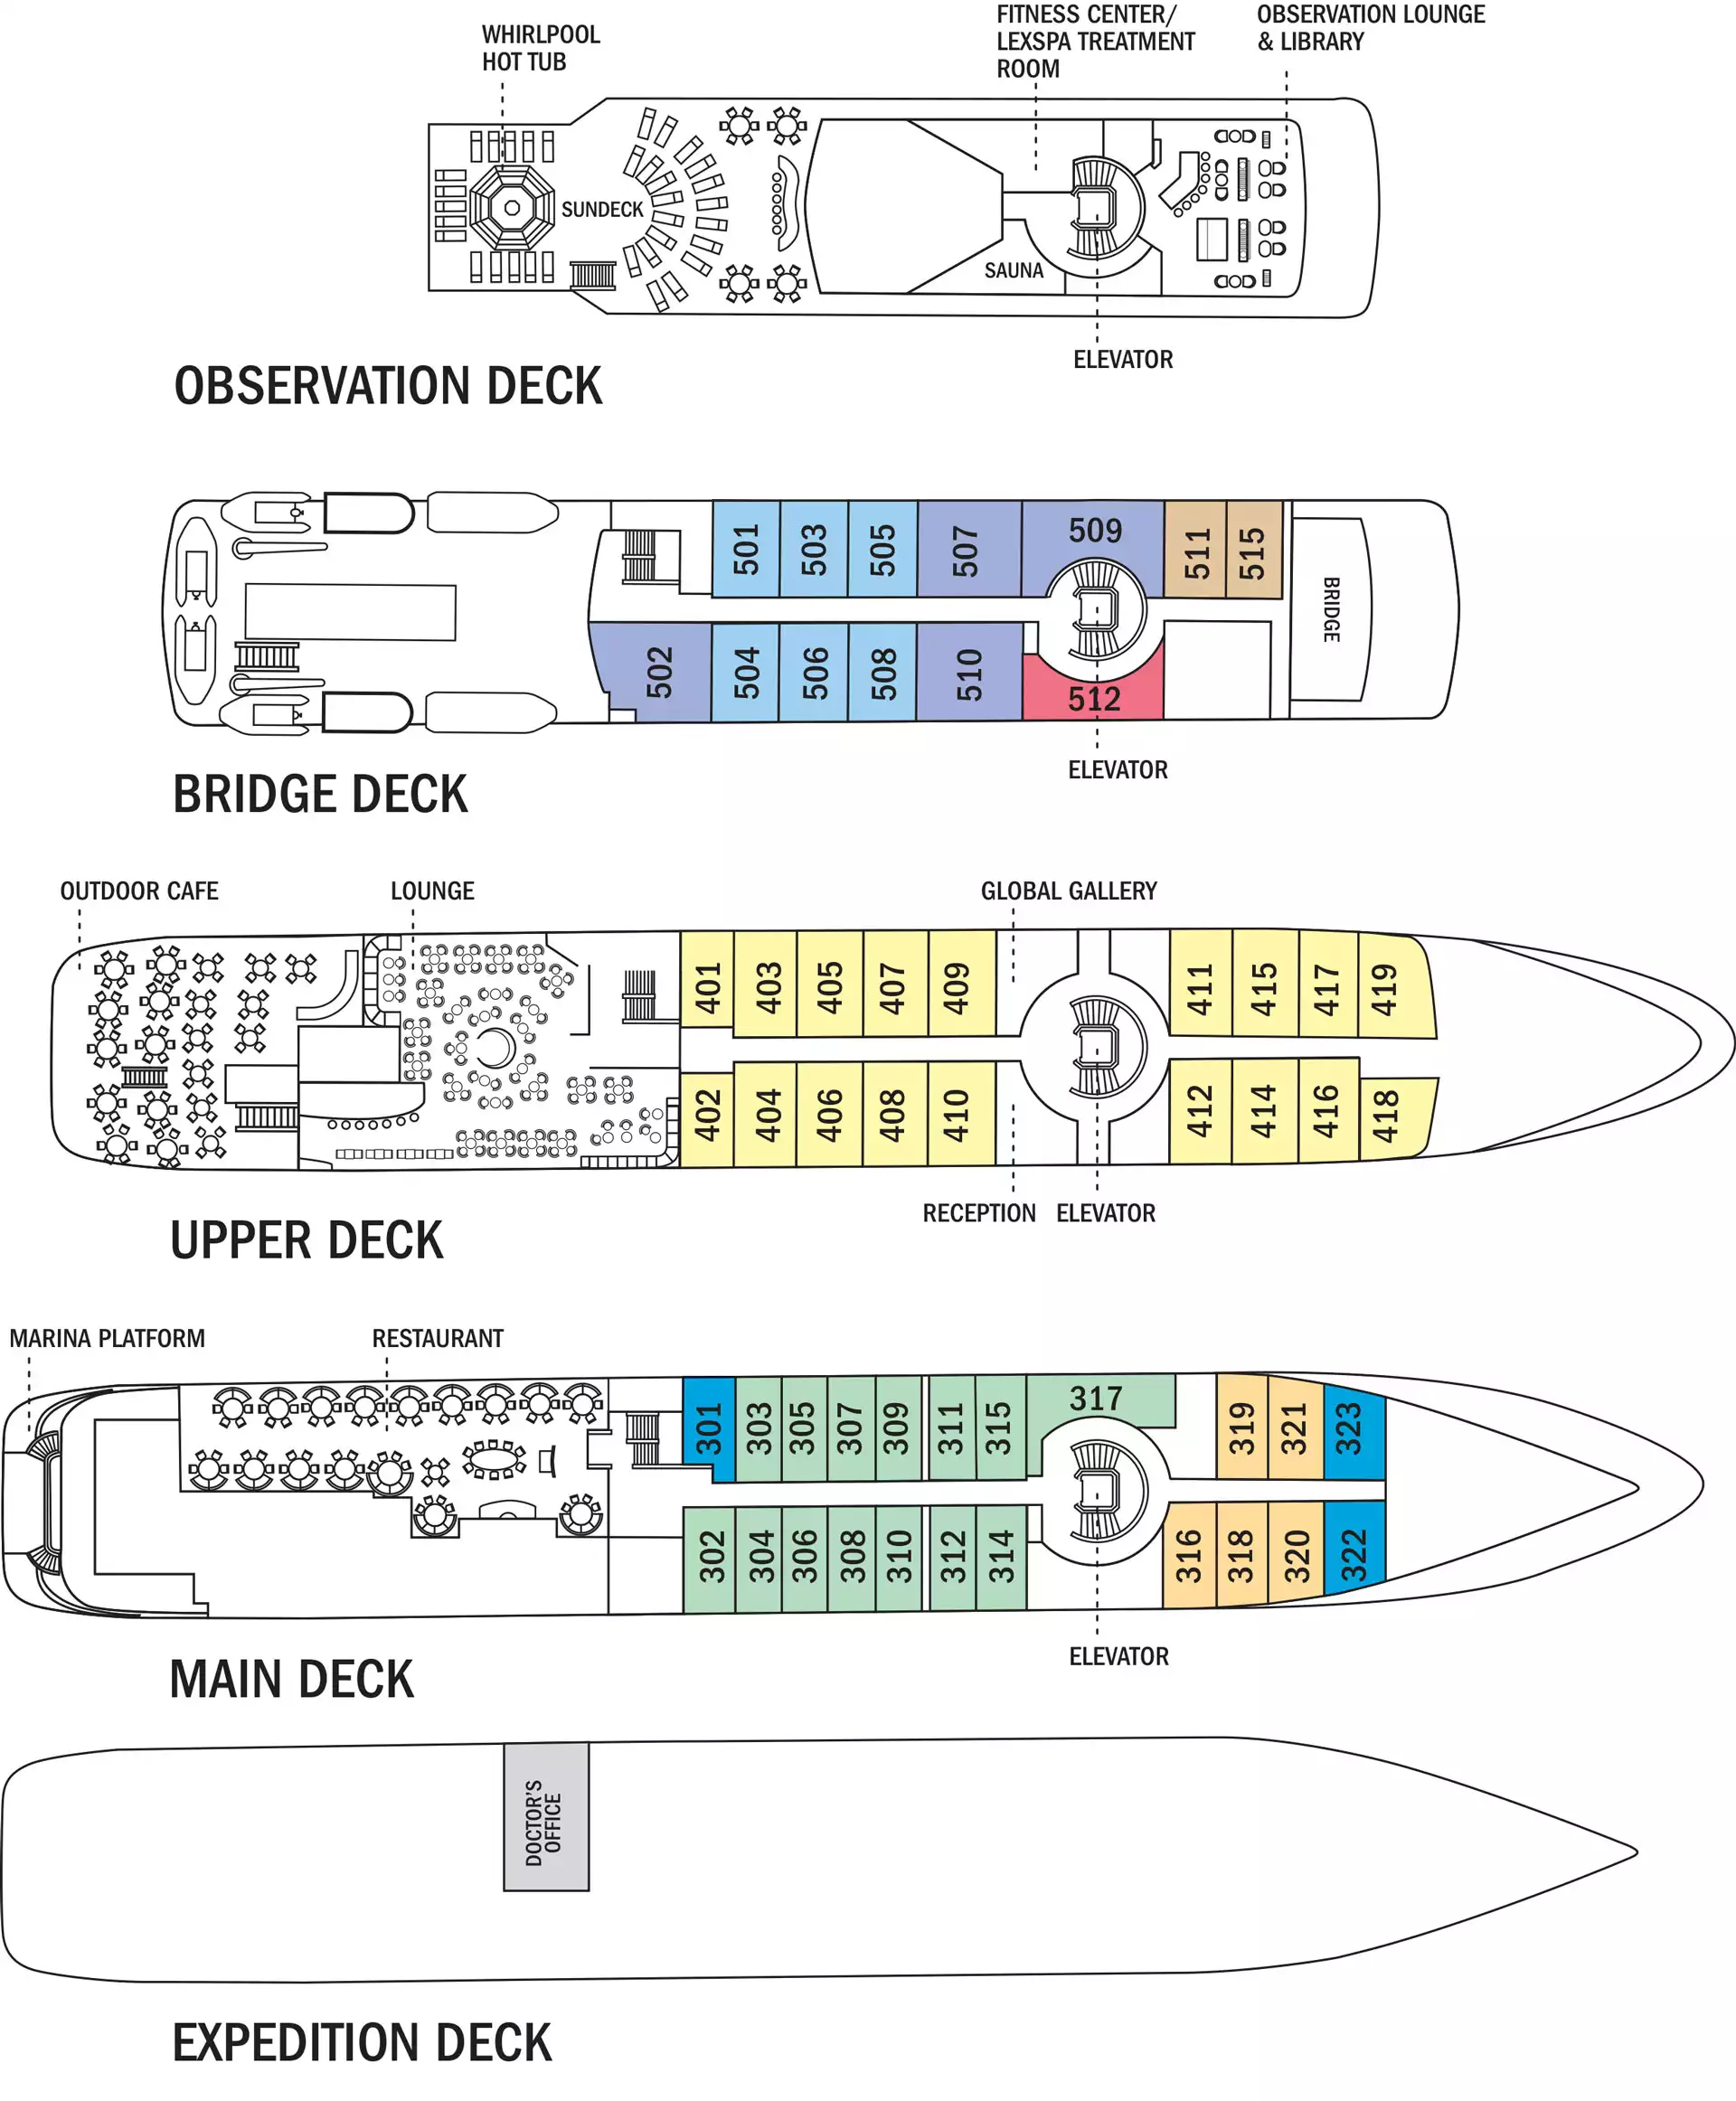 Deck plan detailing Expedition Deck, Main Deck, Upper Deck, Bridge Deck and Observation Deck aboard National Geographic Orion expedition ship.